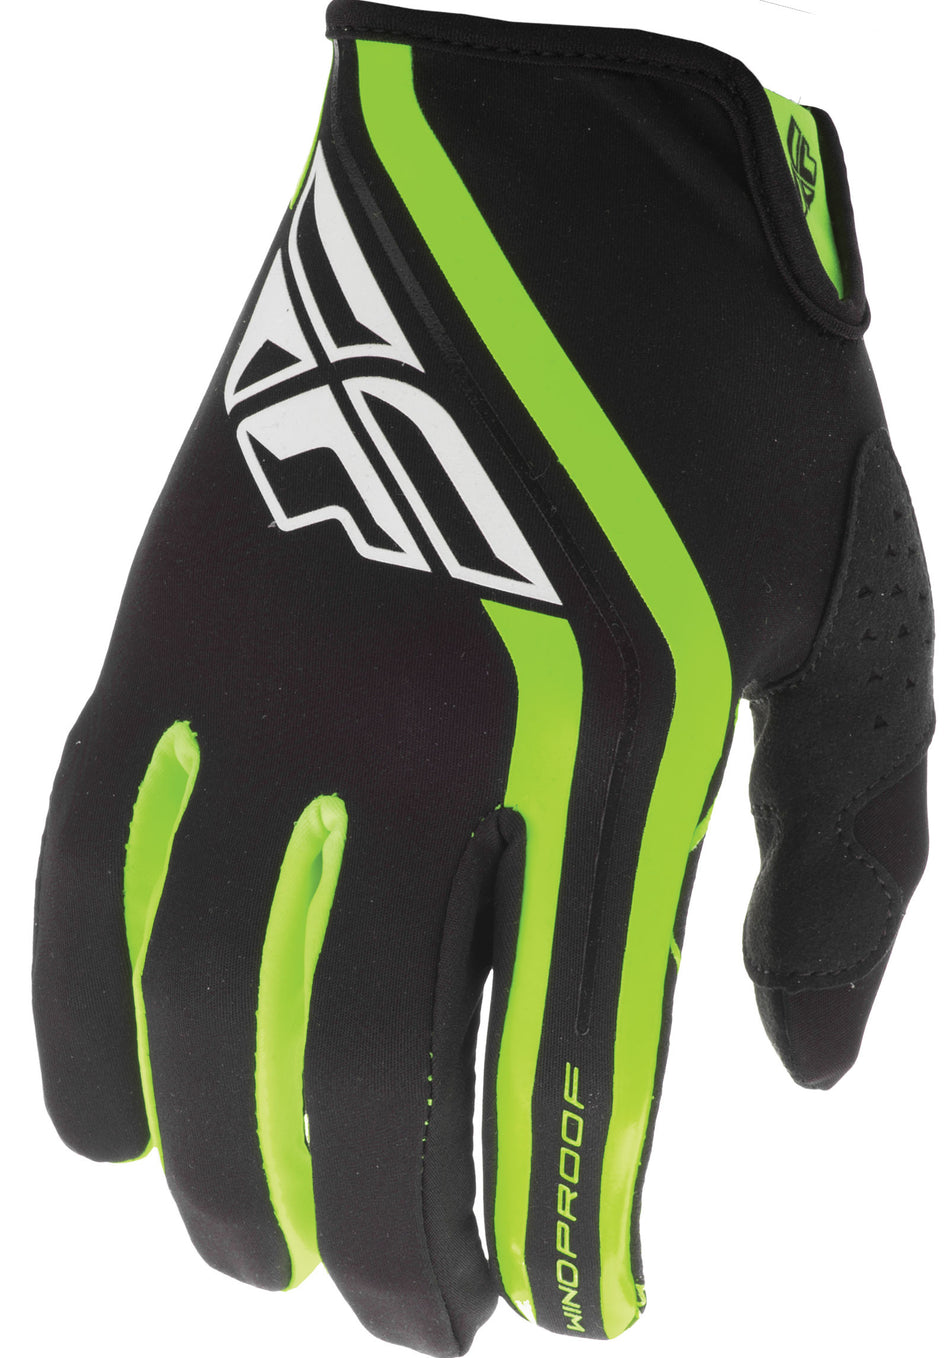 FLY RACING Windproof Gloves Black/Hi-Vis Sz 09 371-14909